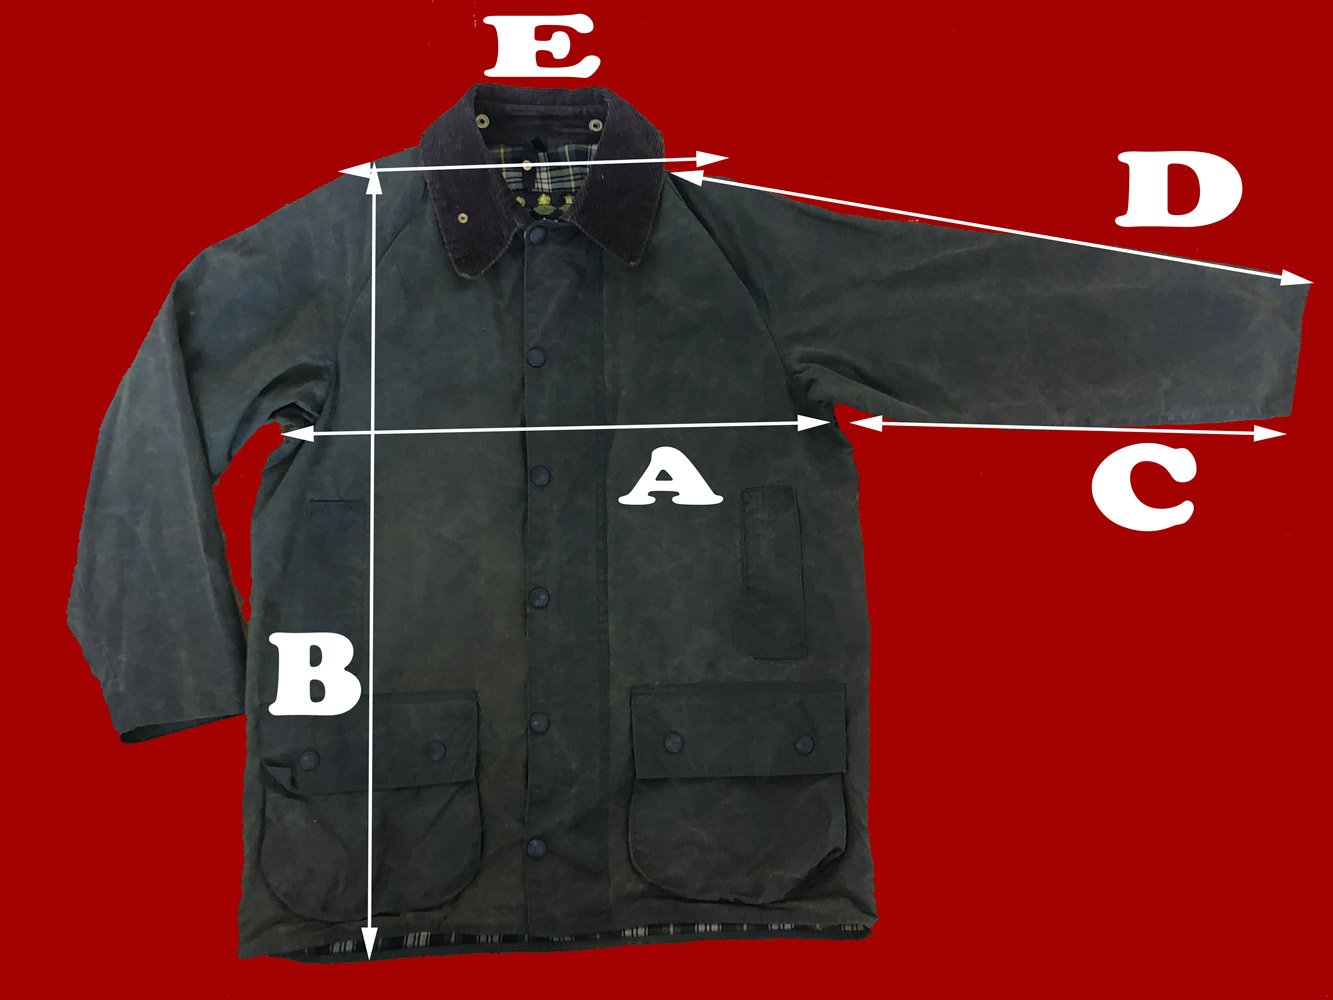 Giacca Barbour con cintura nera utility mac UK14 -Black wax jacket size UK14 with belt M